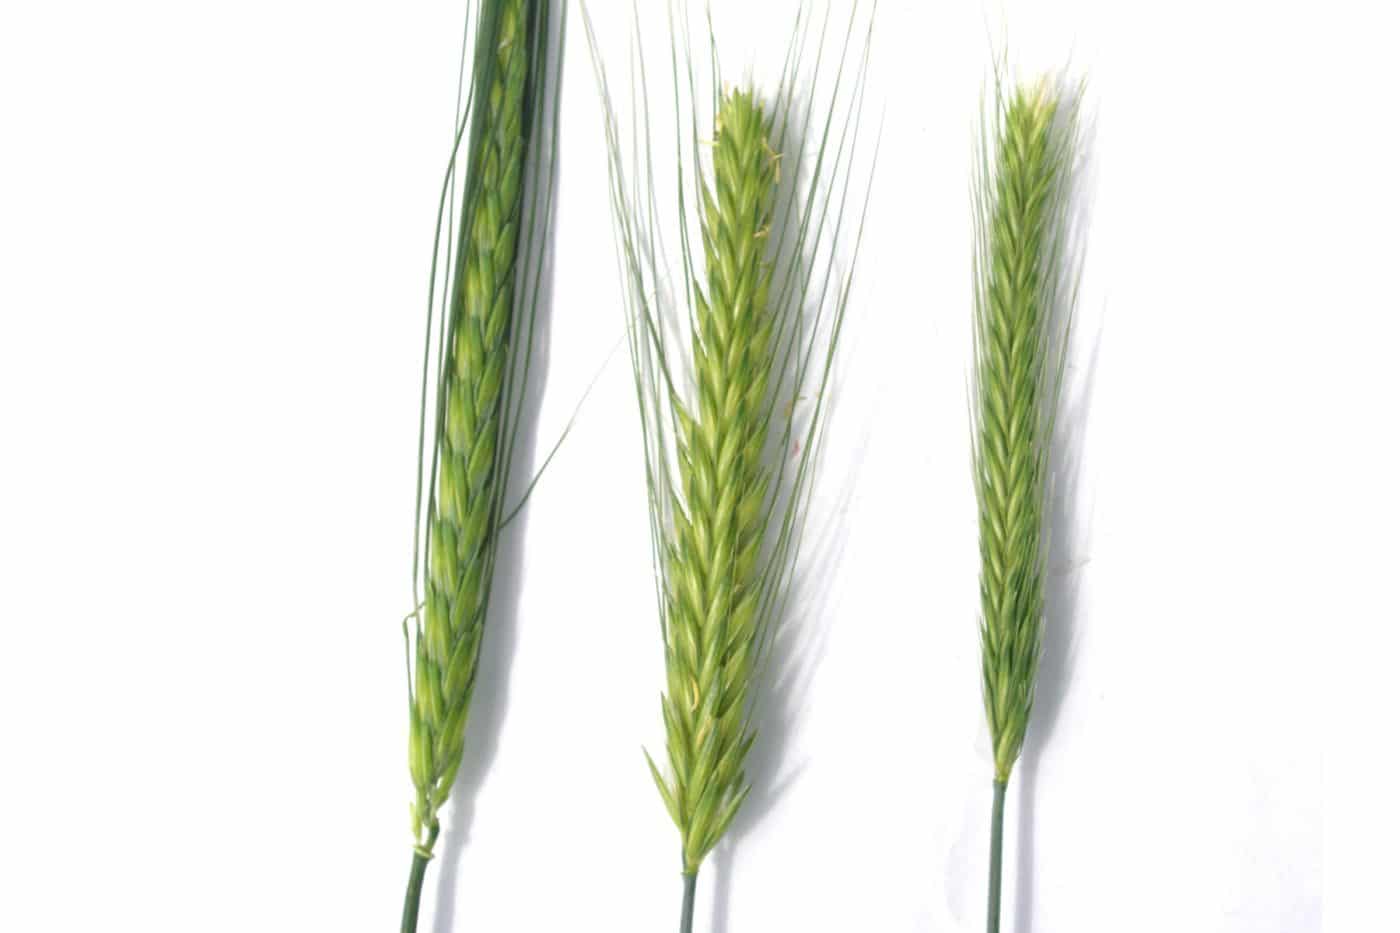 Barley germplasm development phase 2 – evaluation of bulbosum genes and implementation for barley improvement (S0610R)